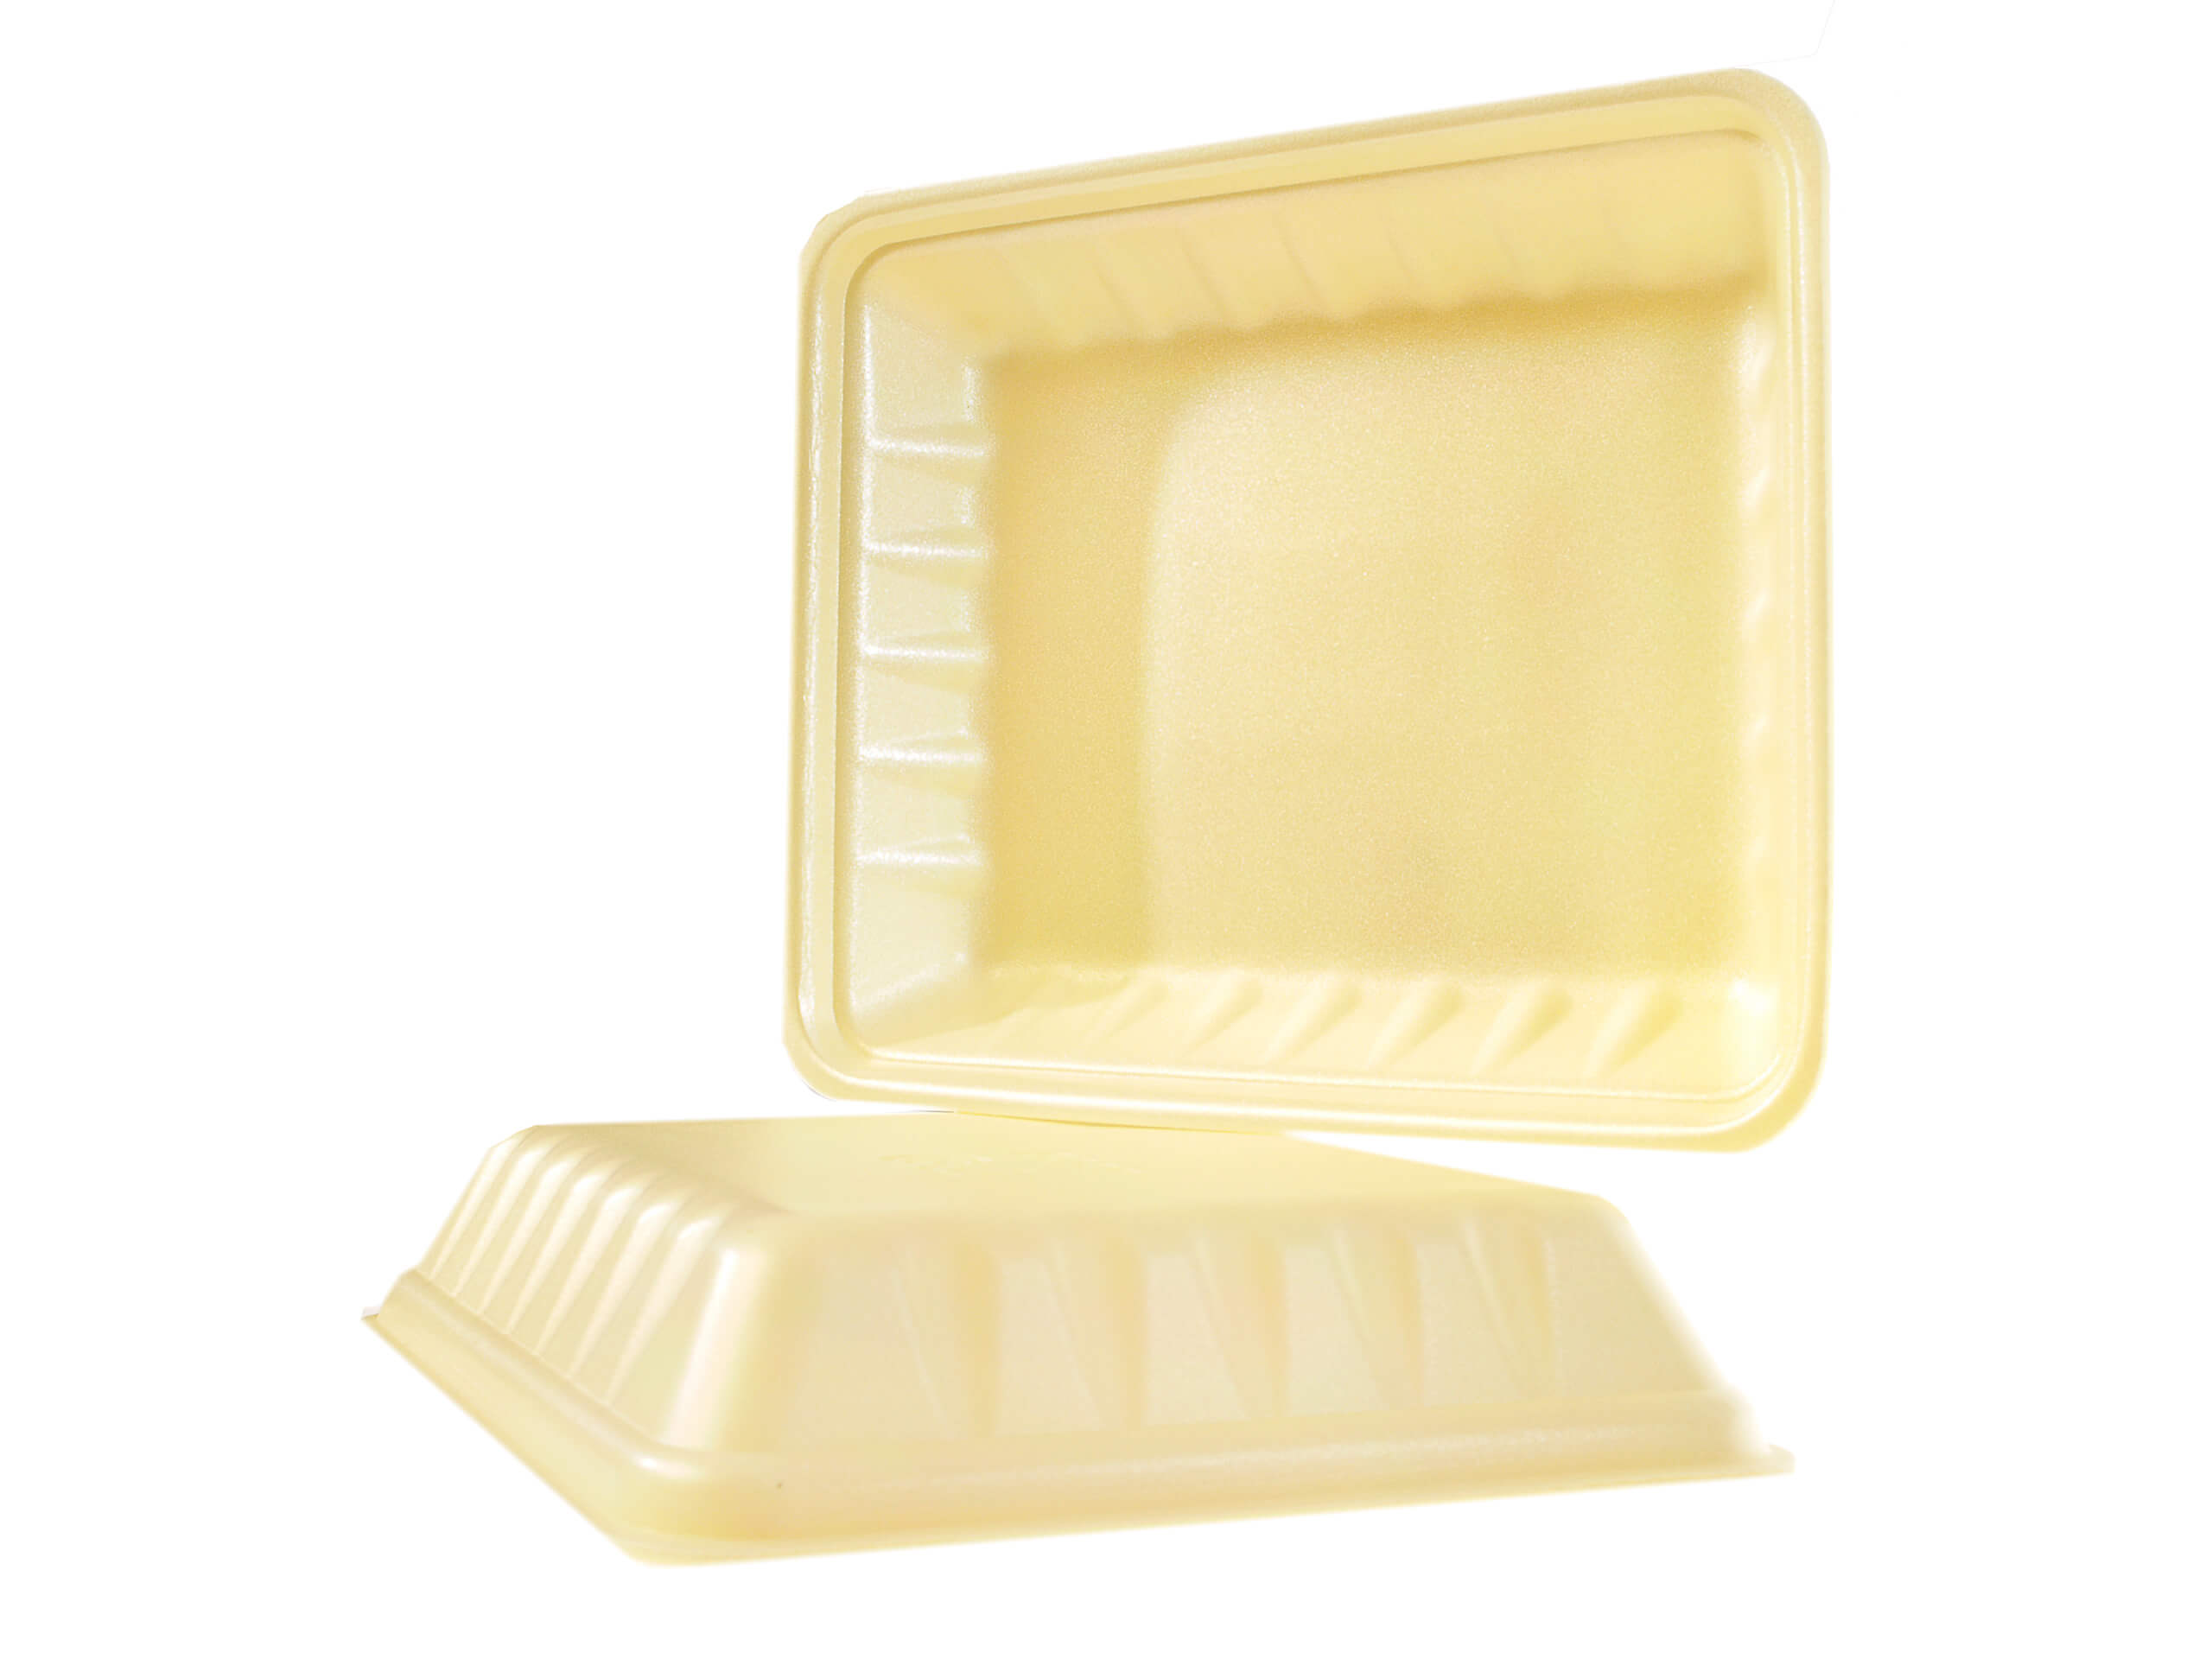 CKF 87949 Yellow 809P Foam Meat Trays 11x9 1/4x2 - 200/CS